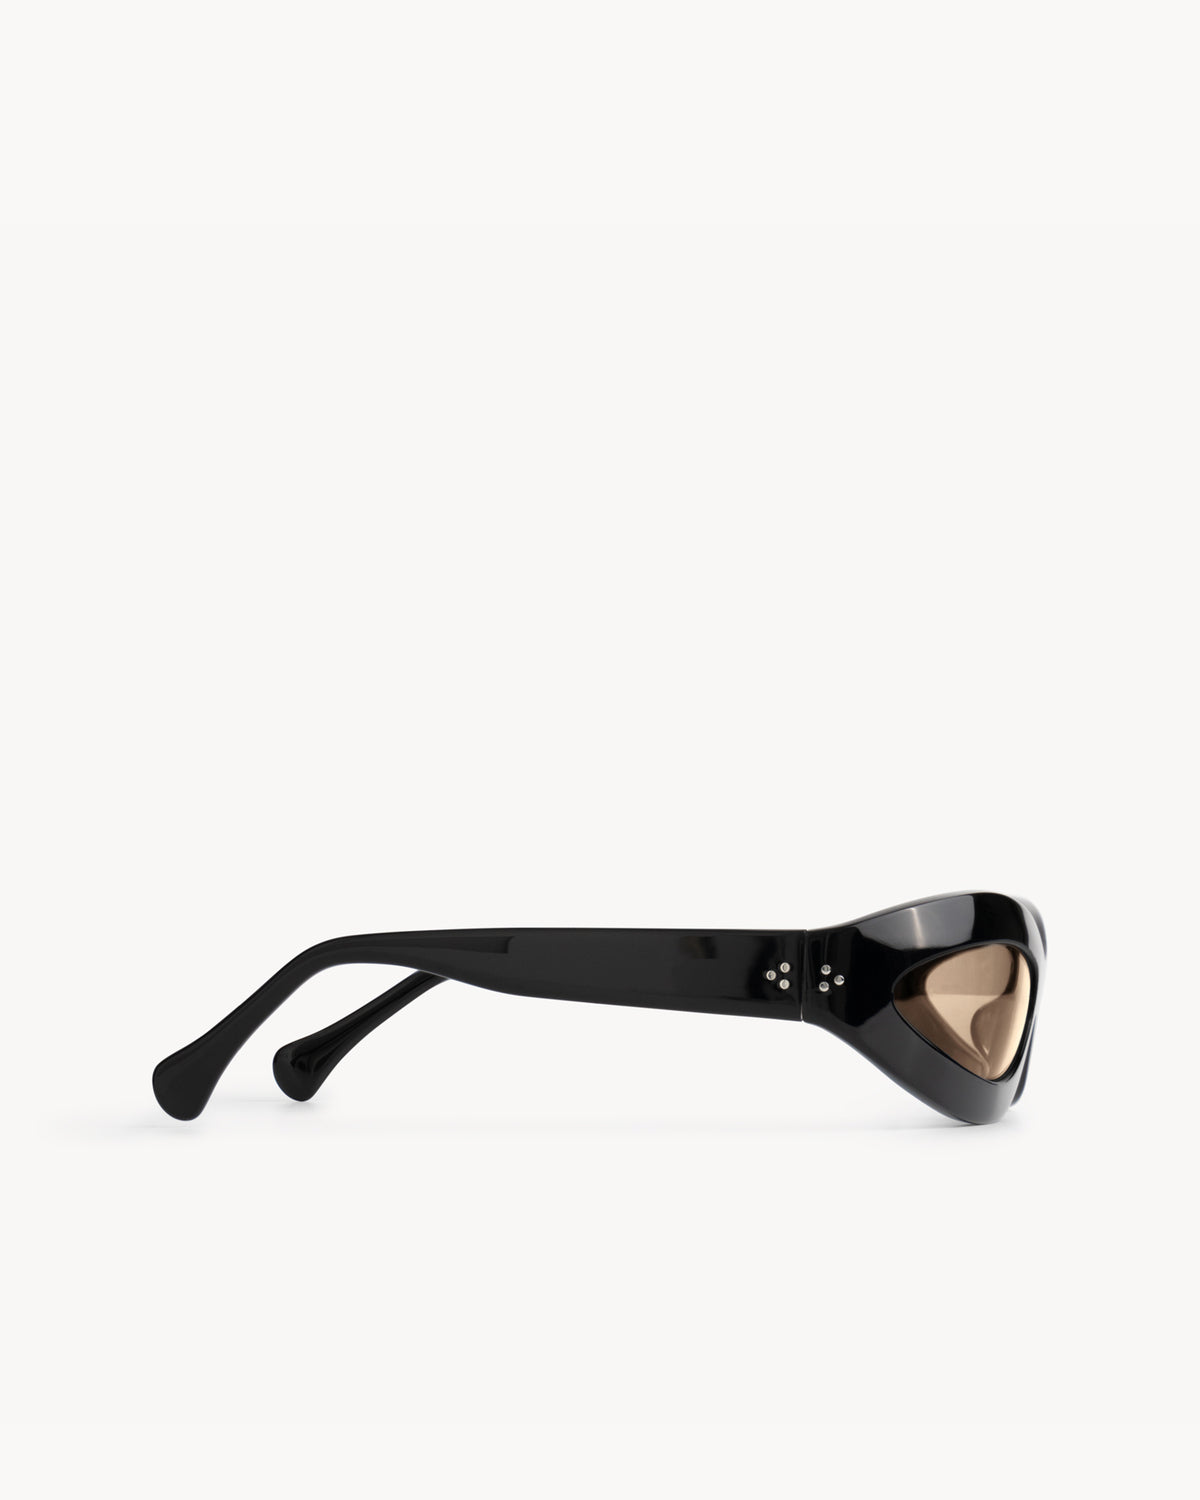 Port Tanger Summa Sunglasses in Black Acetate and Amber Lenses 4